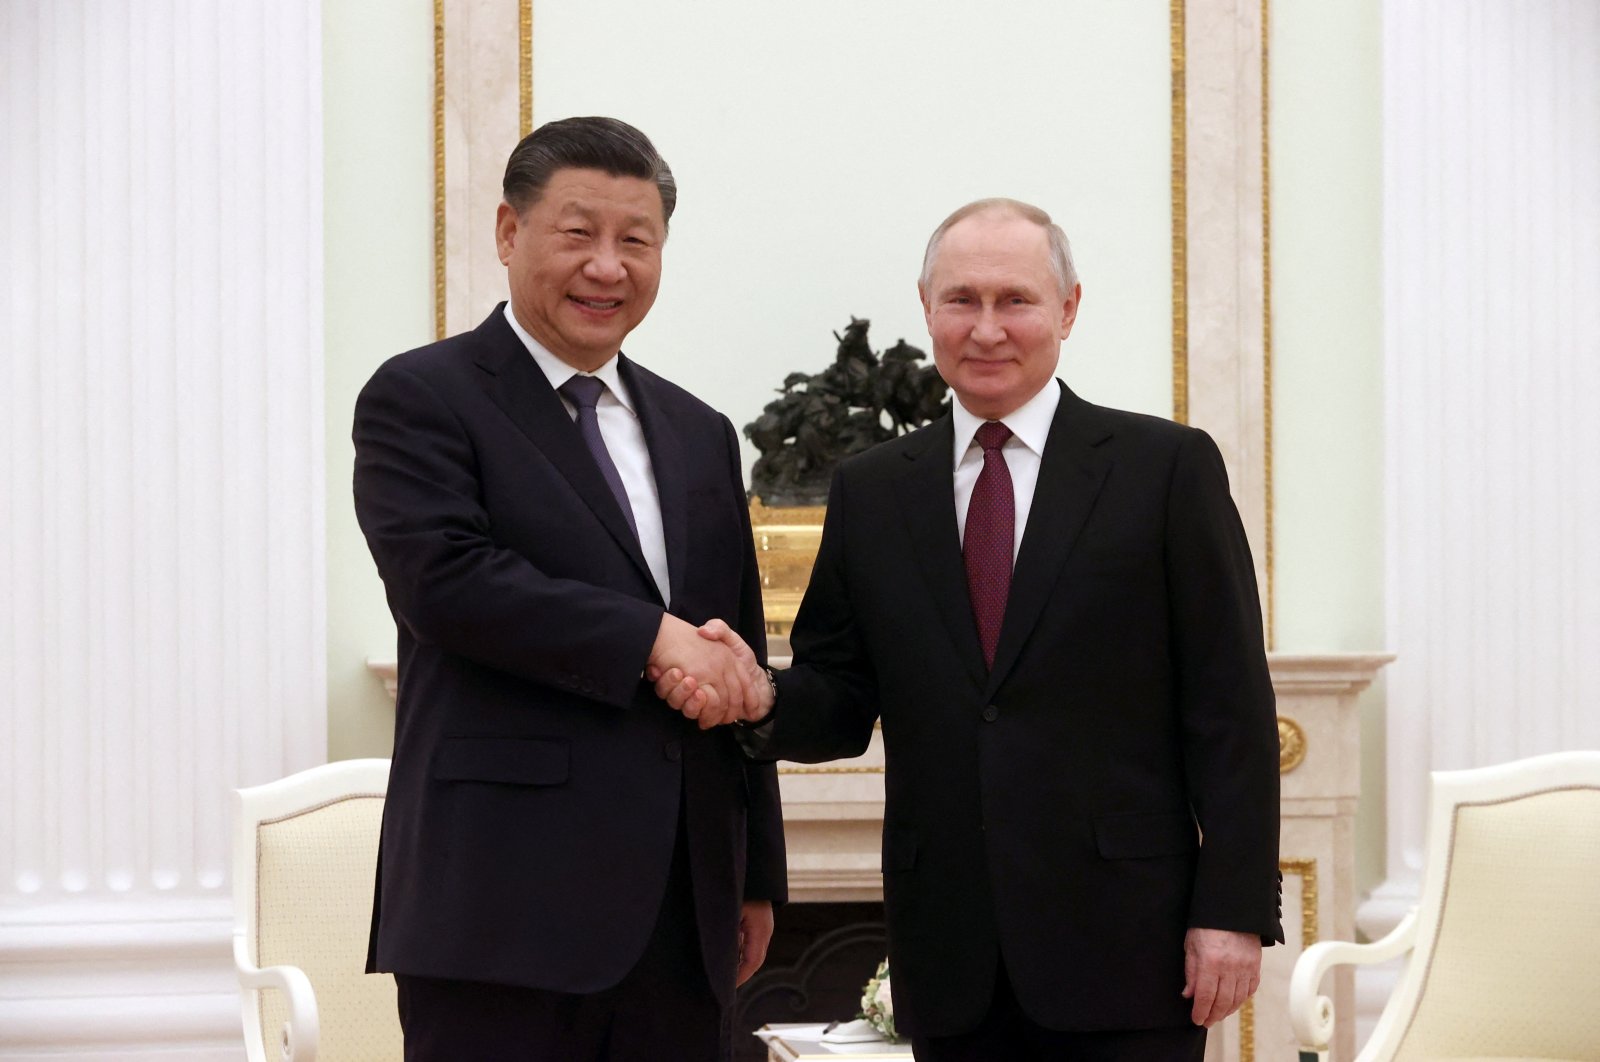 Russian President Vladimir Putin (R) and Chinese President Xi Jinping shake hands during a meeting at the Kremlin, Moscow, Russia, March 20, 2023. (Sputnik/Sergei Karpukhin/Pool via Reuters)